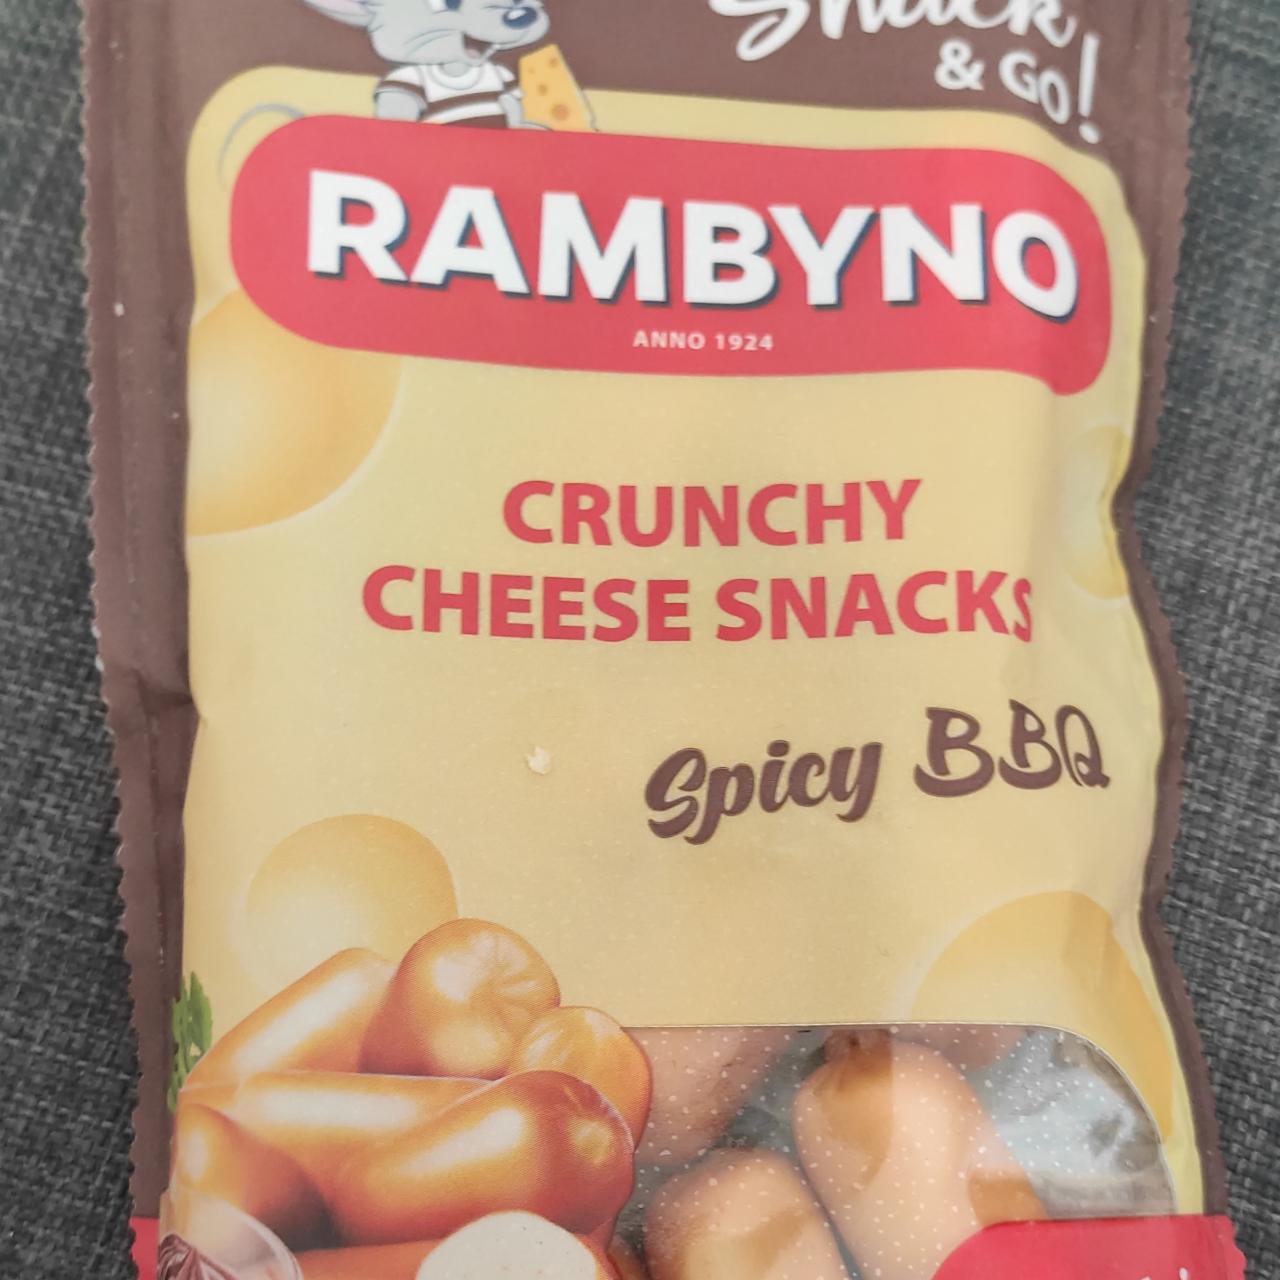 Fotografie - Crunchy Cheese Snacks Spicy BBQ Rambyno